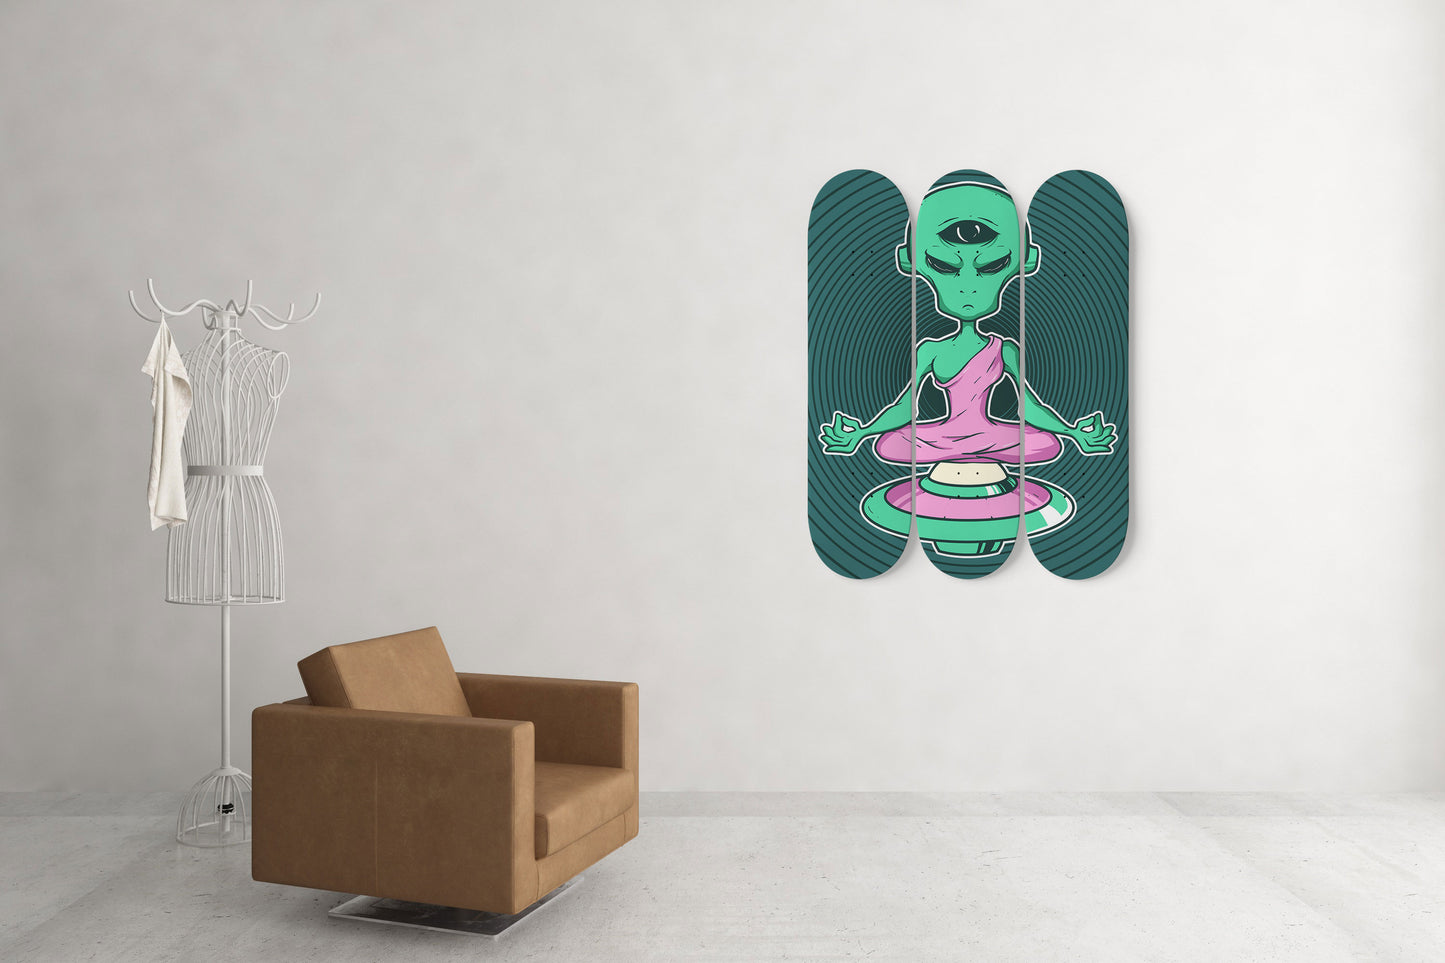 Alien Meditation 3 Deck Skateboard Wall Art: Mesmerizing Cosmic Design